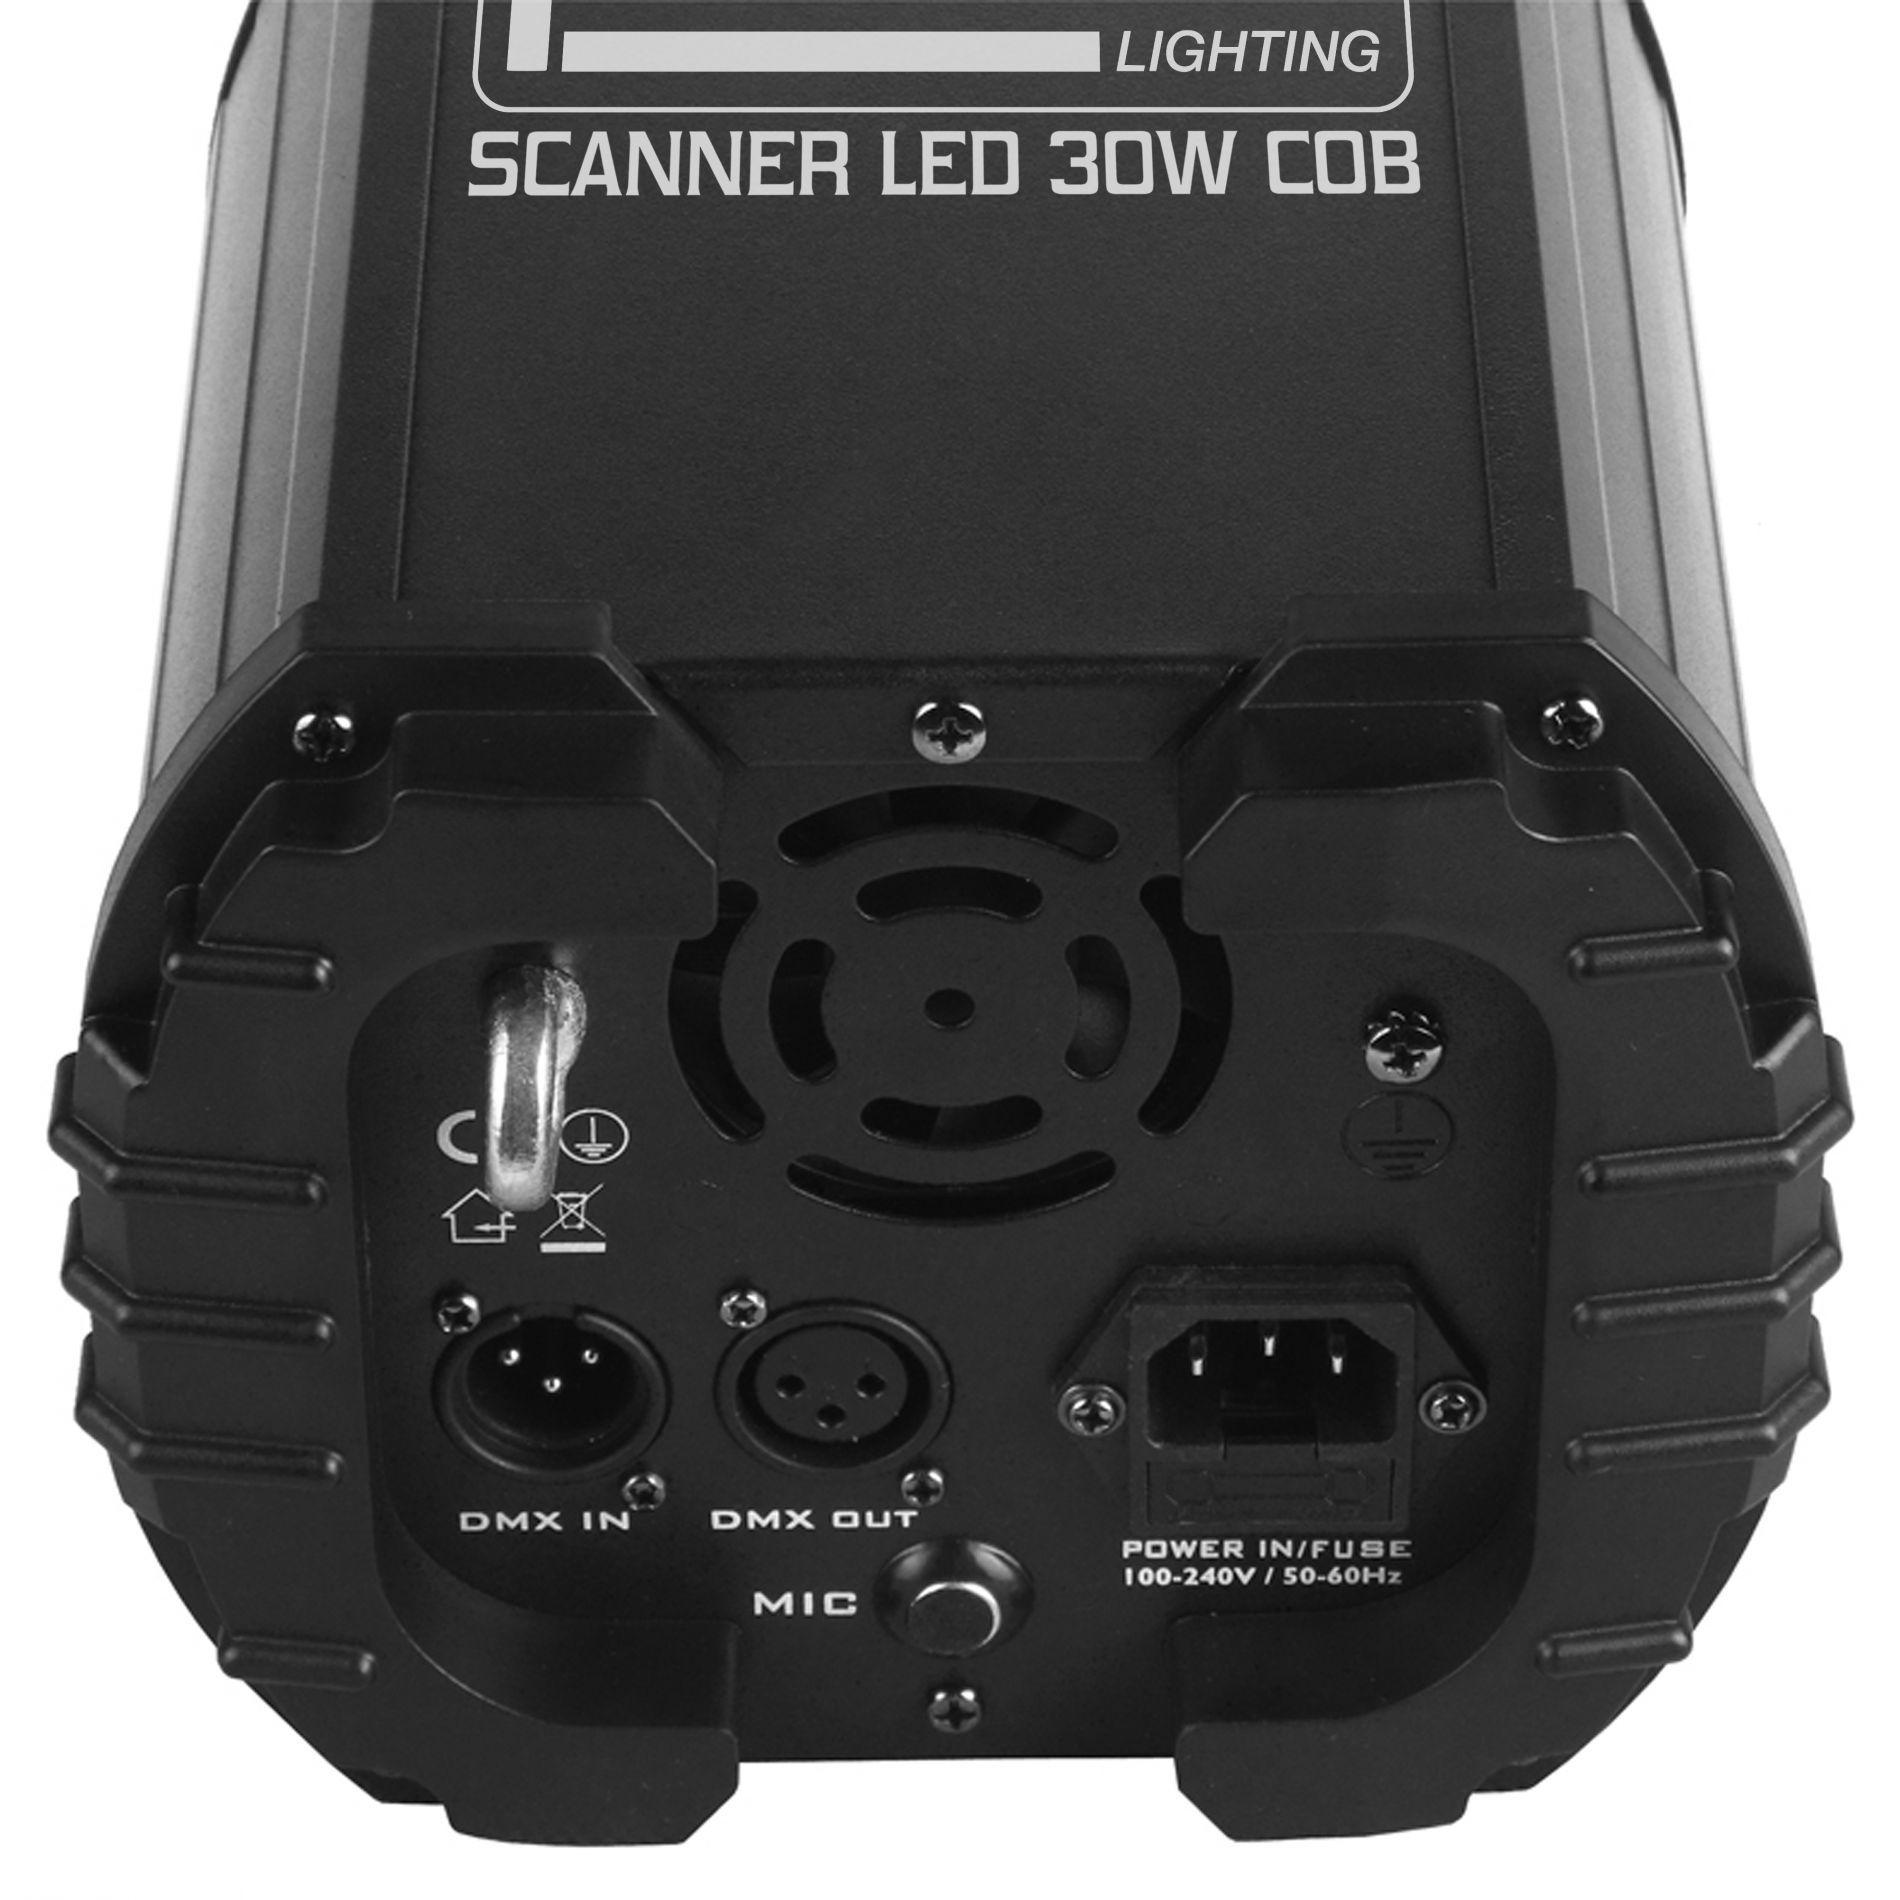 Power Lighting Scanner Led 30w Cob - - Scan - Variation 2